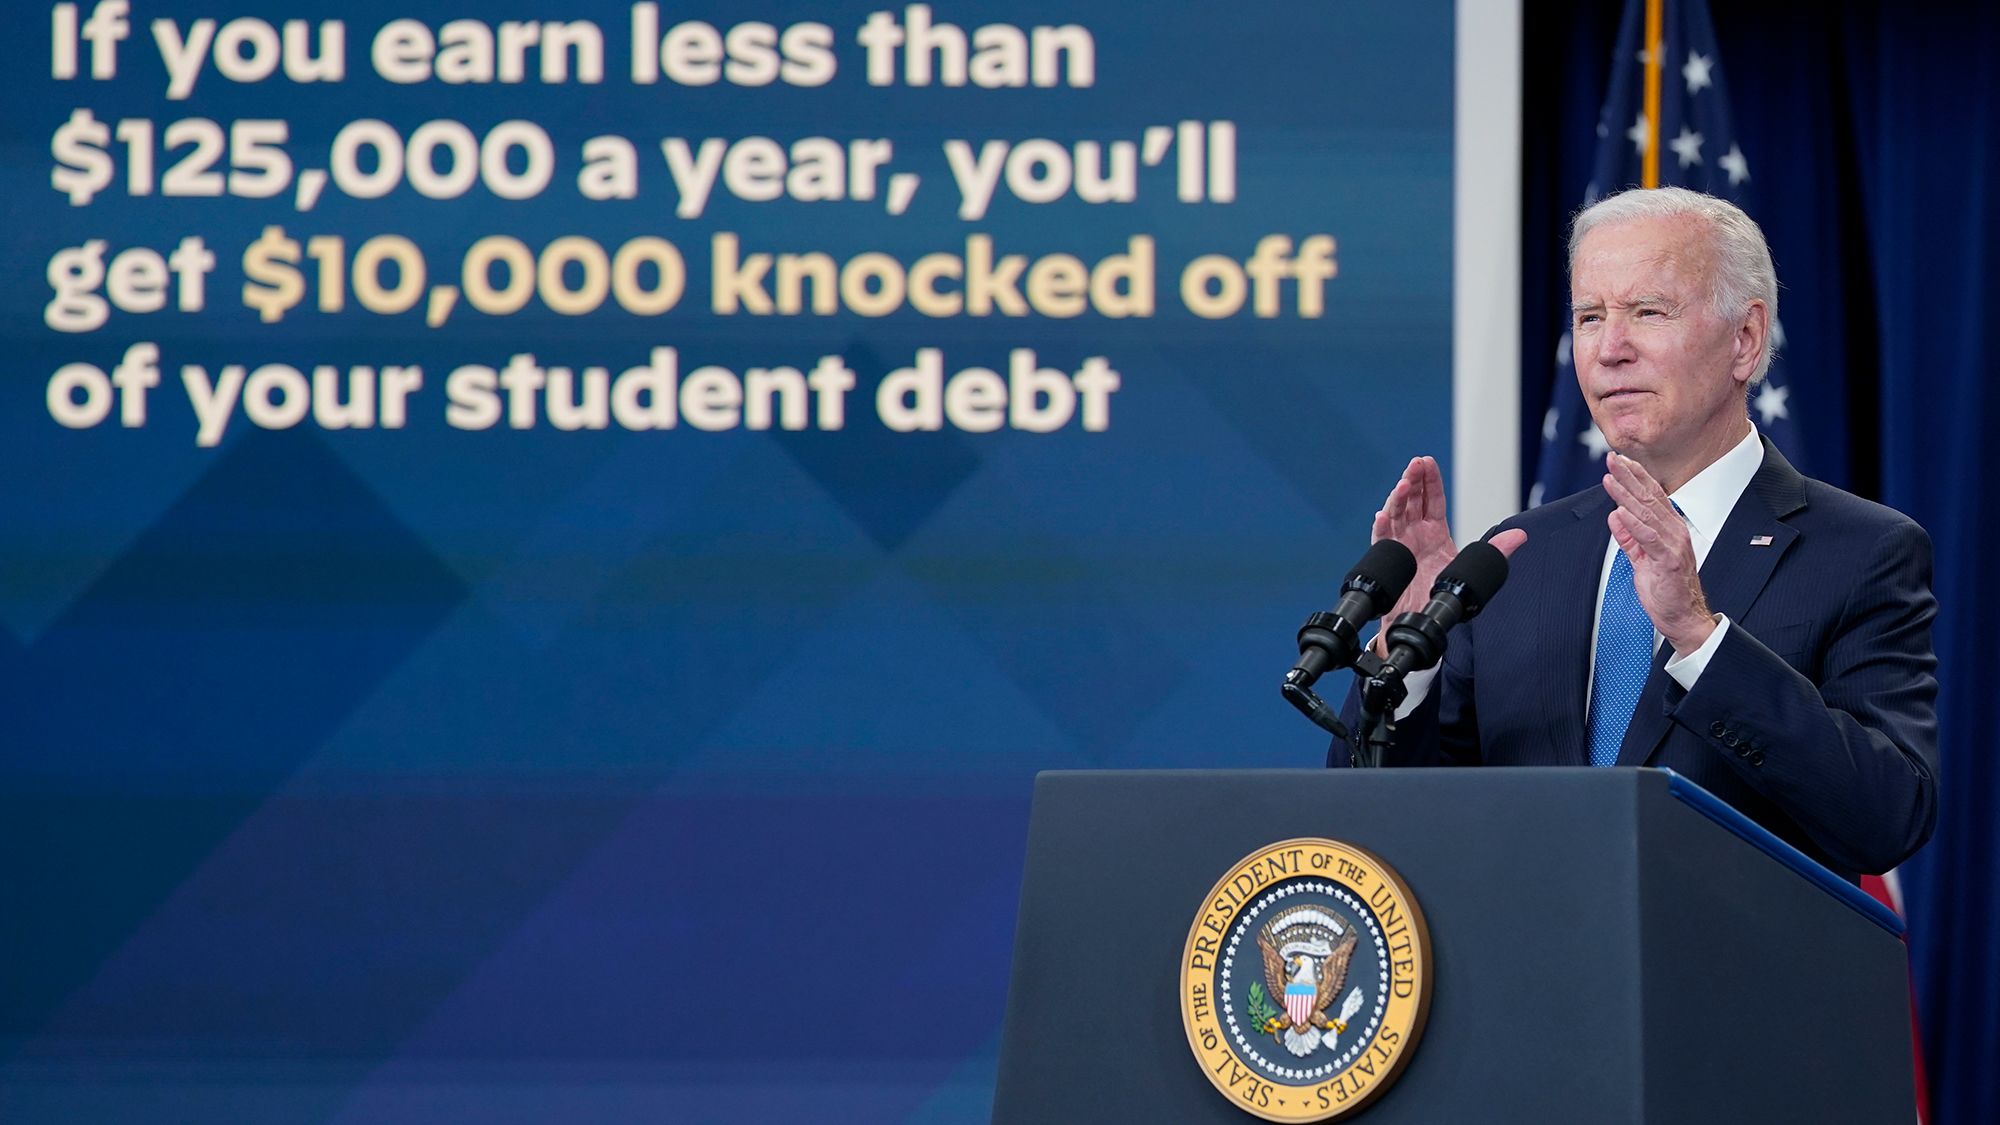 Student debt crisis action plan